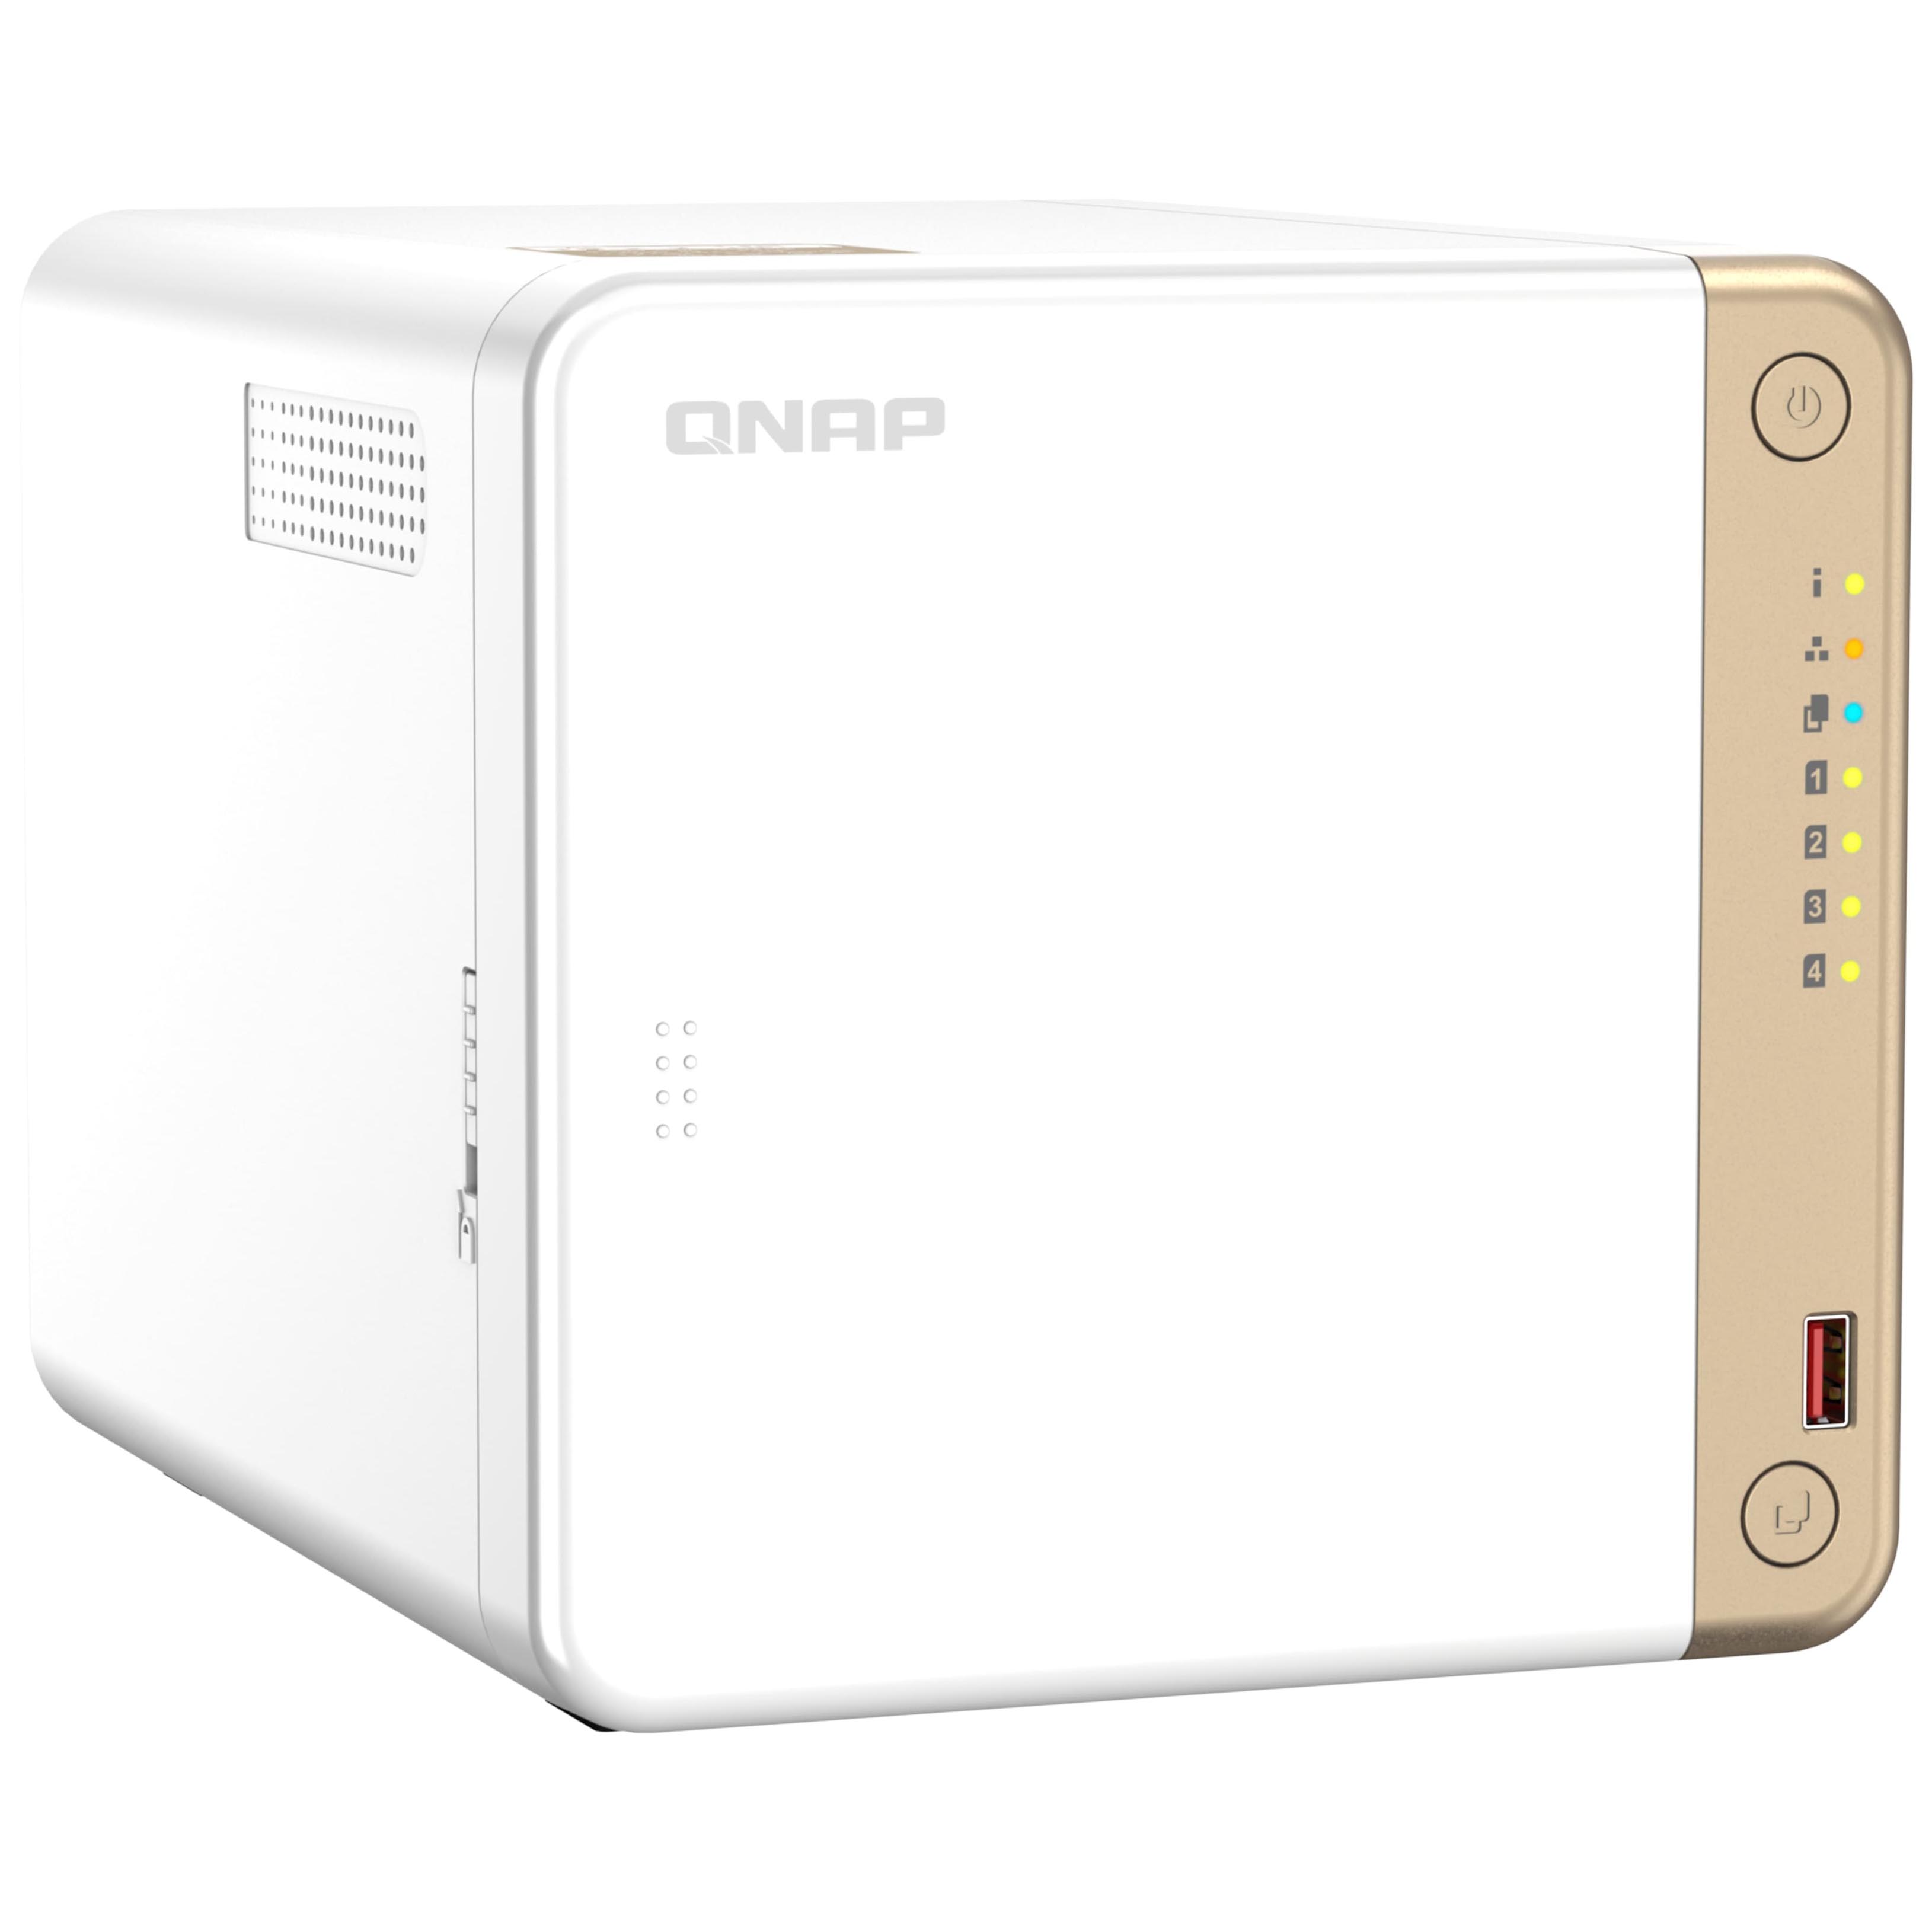 Сетевое хранилище QNAP TS-462 Nas, 4 отсека, без дисков, белый сетевое хранилище nas qnap ts 462 2g белый